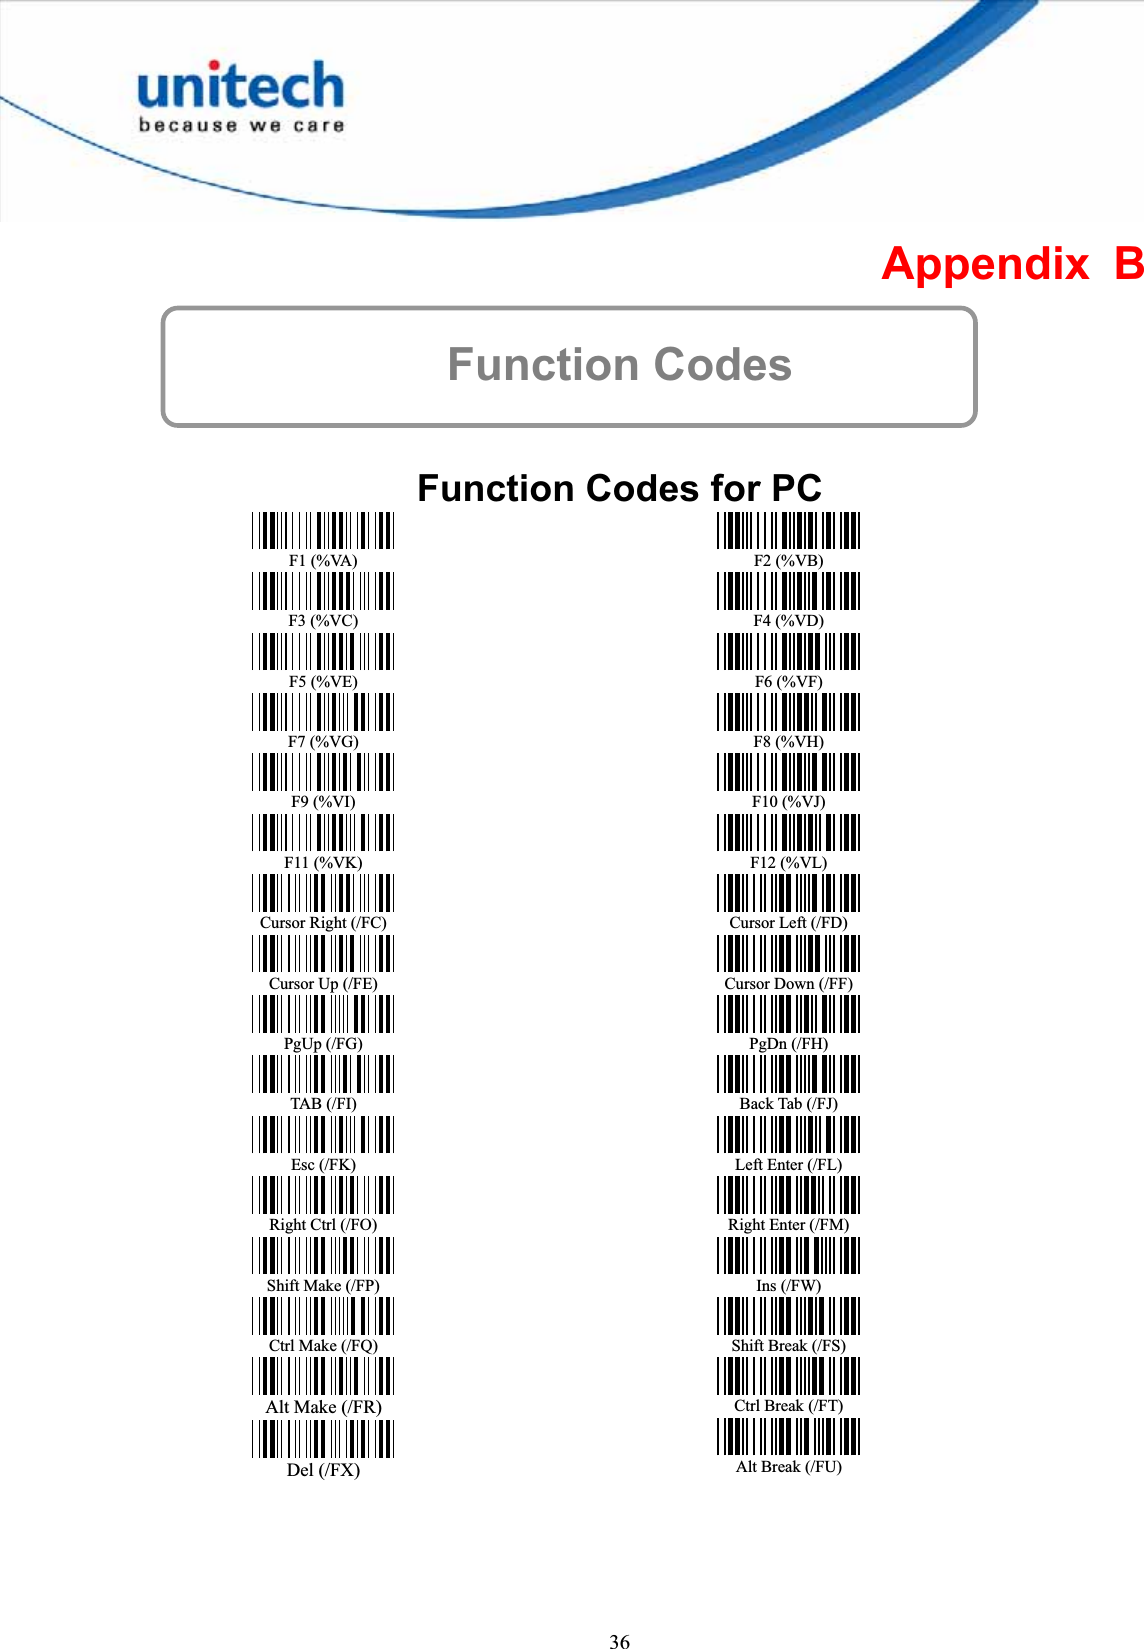 36Appendix B Function Codes Function Codes for PC F1 (%VA) F3 (%VC) F5 (%VE) F7 (%VG) F9 (%VI) F11 (%VK) Cursor Right (/FC) Cursor Up (/FE) PgUp (/FG) TAB (/FI) Esc (/FK) Right Ctrl (/FO) Shift Make (/FP) Ctrl Make (/FQ) Alt Make (/FR) Del (/FX)F2 (%VB) F4 (%VD) F6 (%VF) F8 (%VH) F10 (%VJ) F12 (%VL) Cursor Left (/FD) Cursor Down (/FF) PgDn (/FH) Back Tab (/FJ) Left Enter (/FL) Right Enter (/FM) Ins (/FW) Shift Break (/FS) Ctrl Break (/FT) Alt Break (/FU)